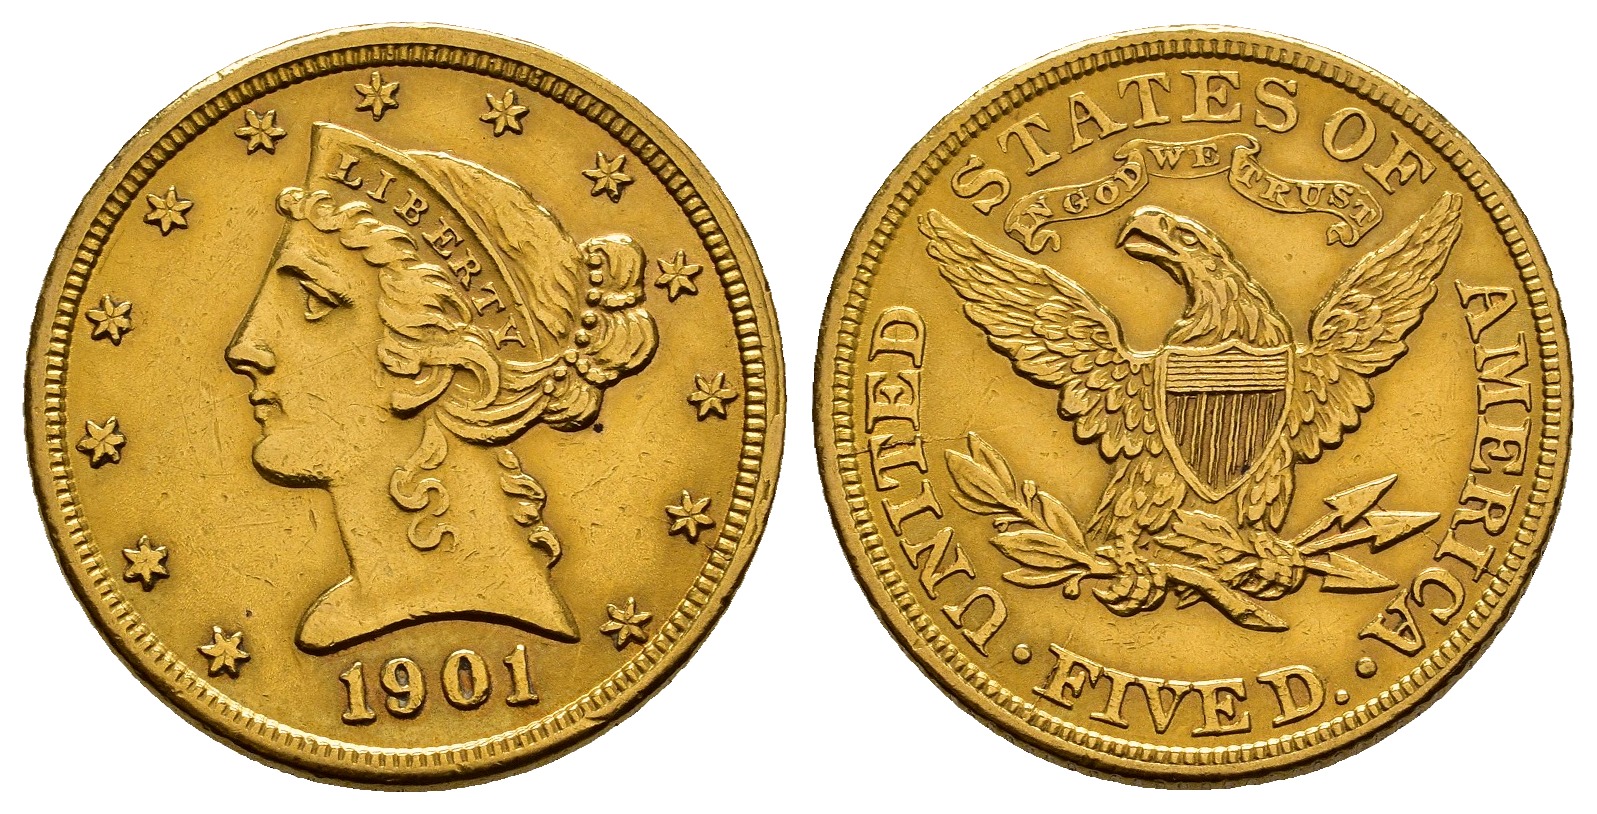 PEUS 8295 USA 7,52 g Feingold. Coronet Head 5 Dollars GOLD 1901 Sehr schön